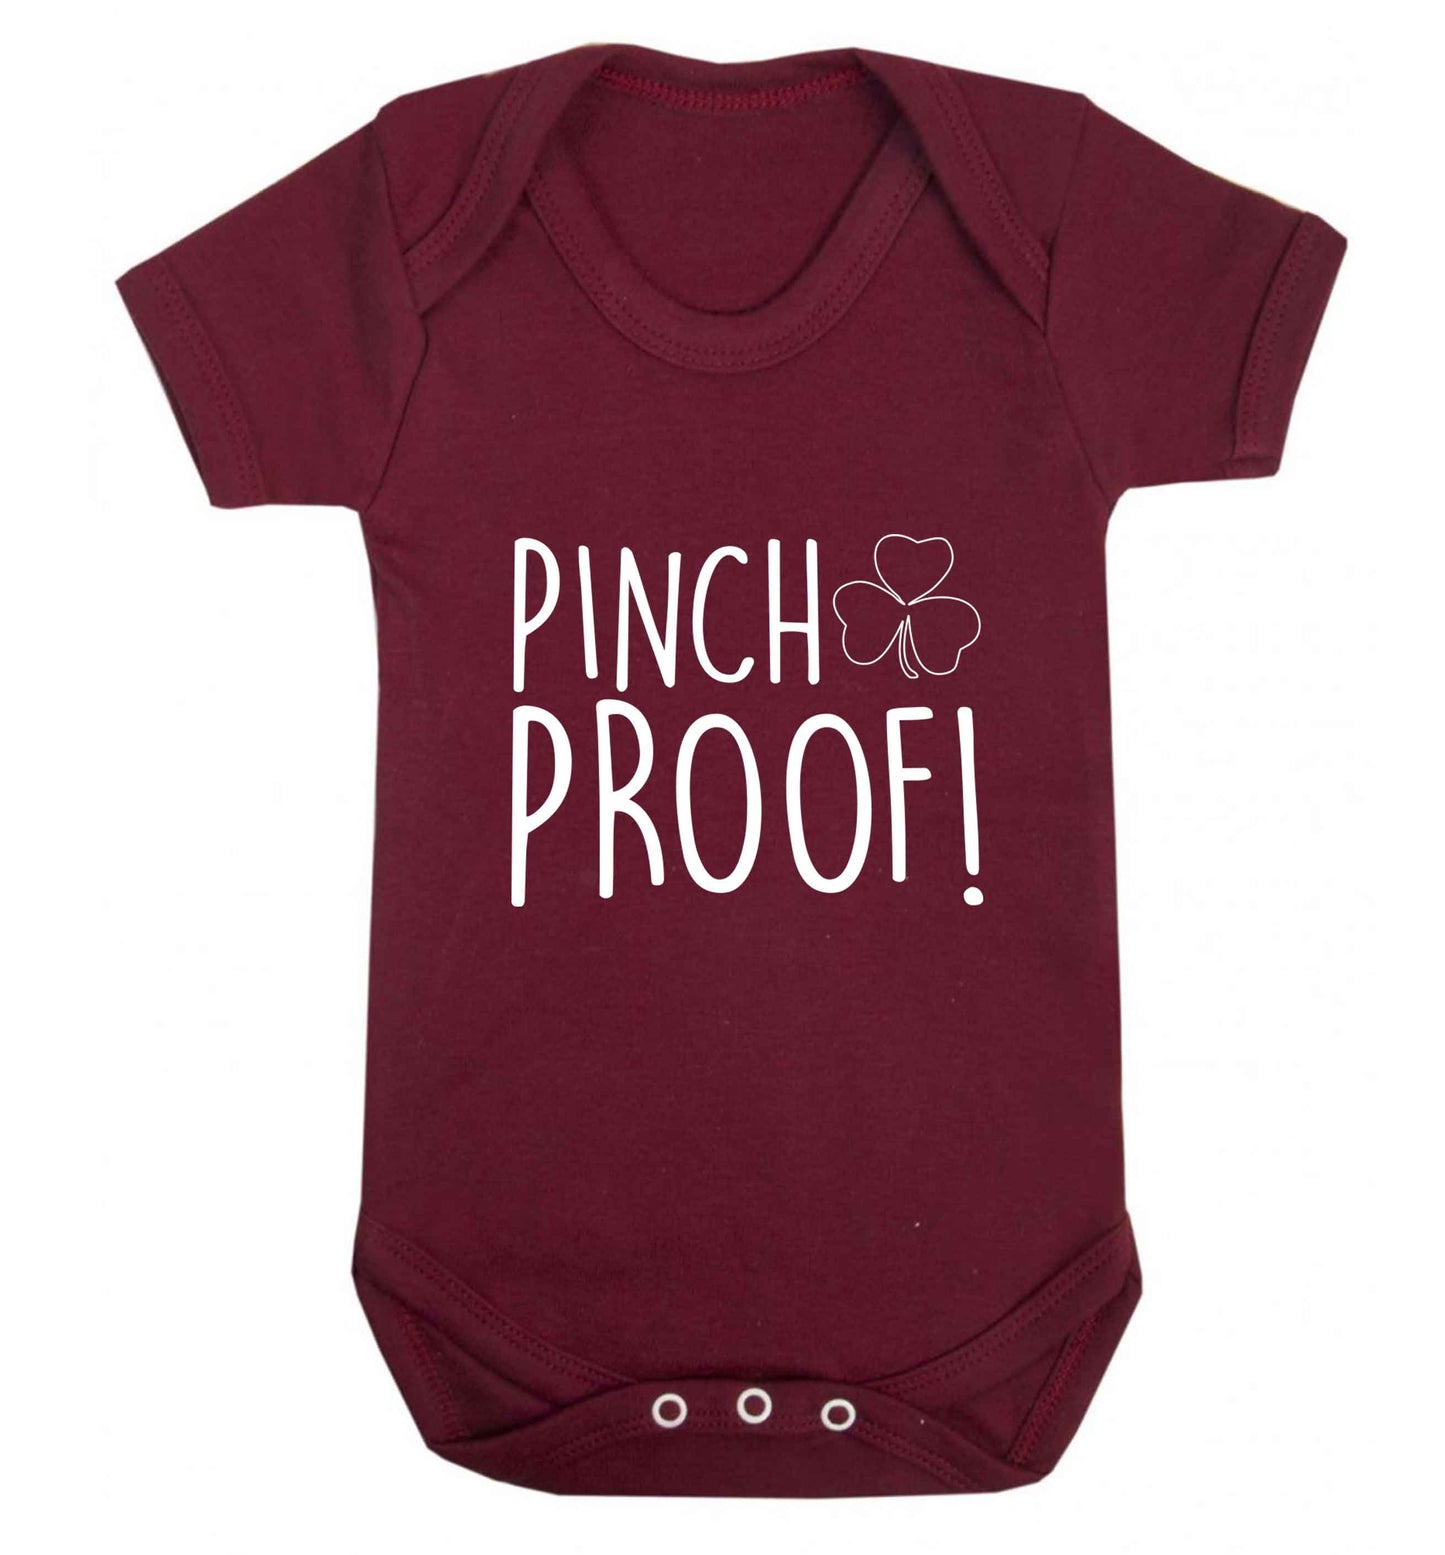 Pinch Proof baby vest maroon 18-24 months